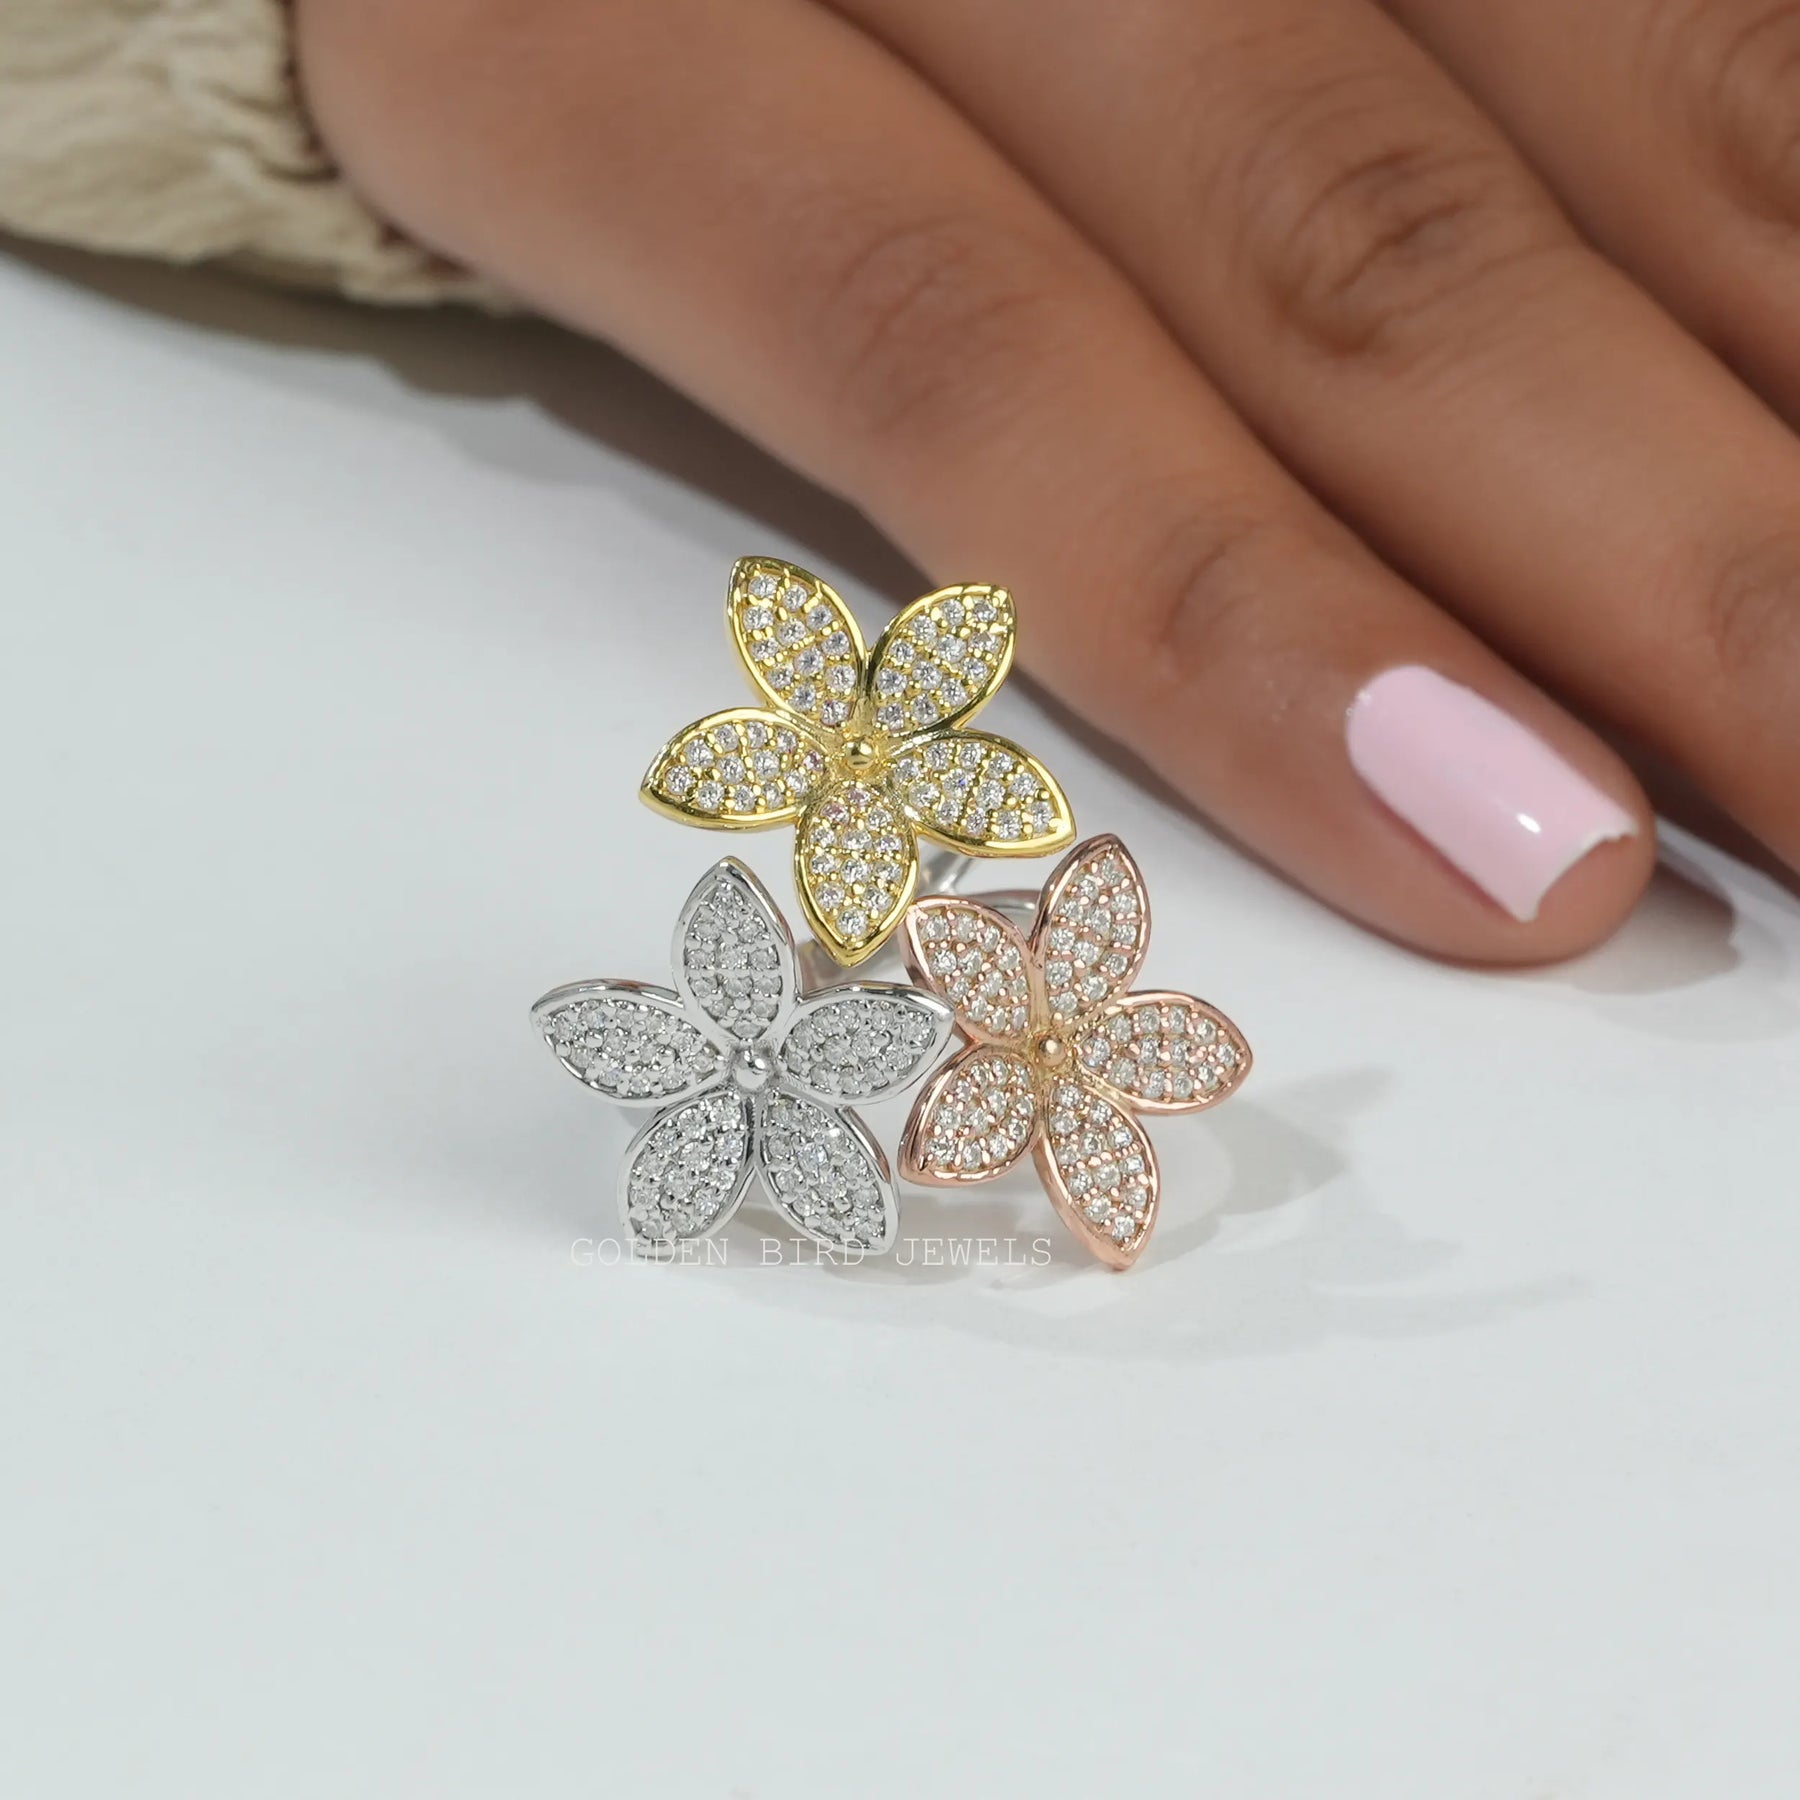 [Flower Style Multi-Tone Moissanite Engagement Ring With VVS Clarity Moissanite]-[Golden Bird Jewels]